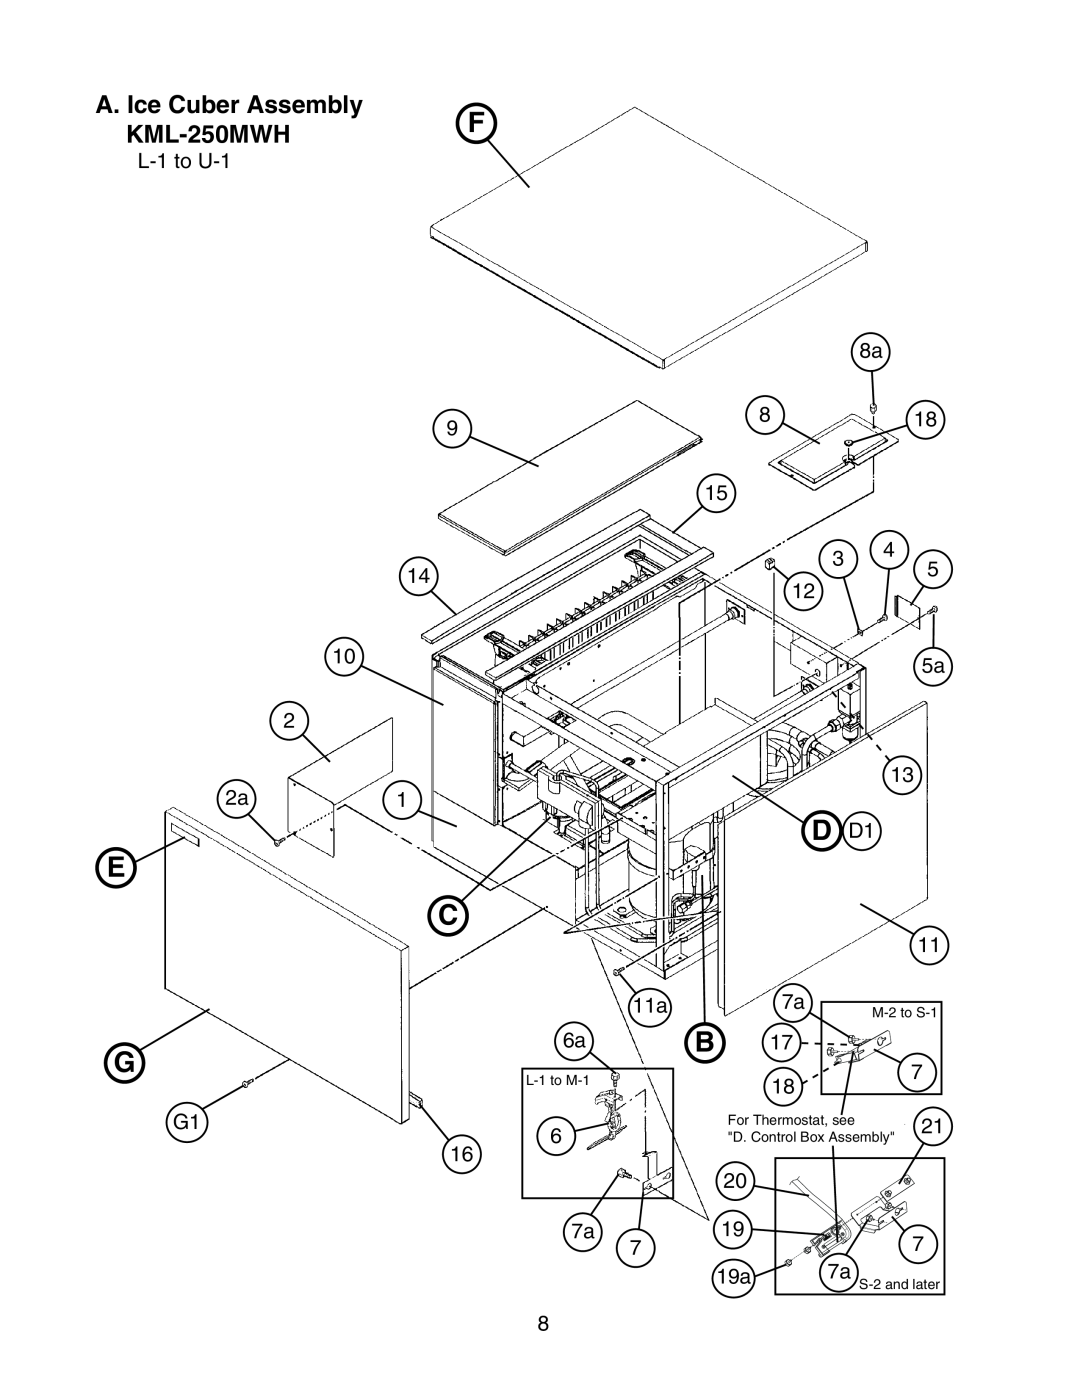 Hoshizaki KML-250MAH manual E C G, D D1, A. Ice Cuber Assembly KML-250MWHF 